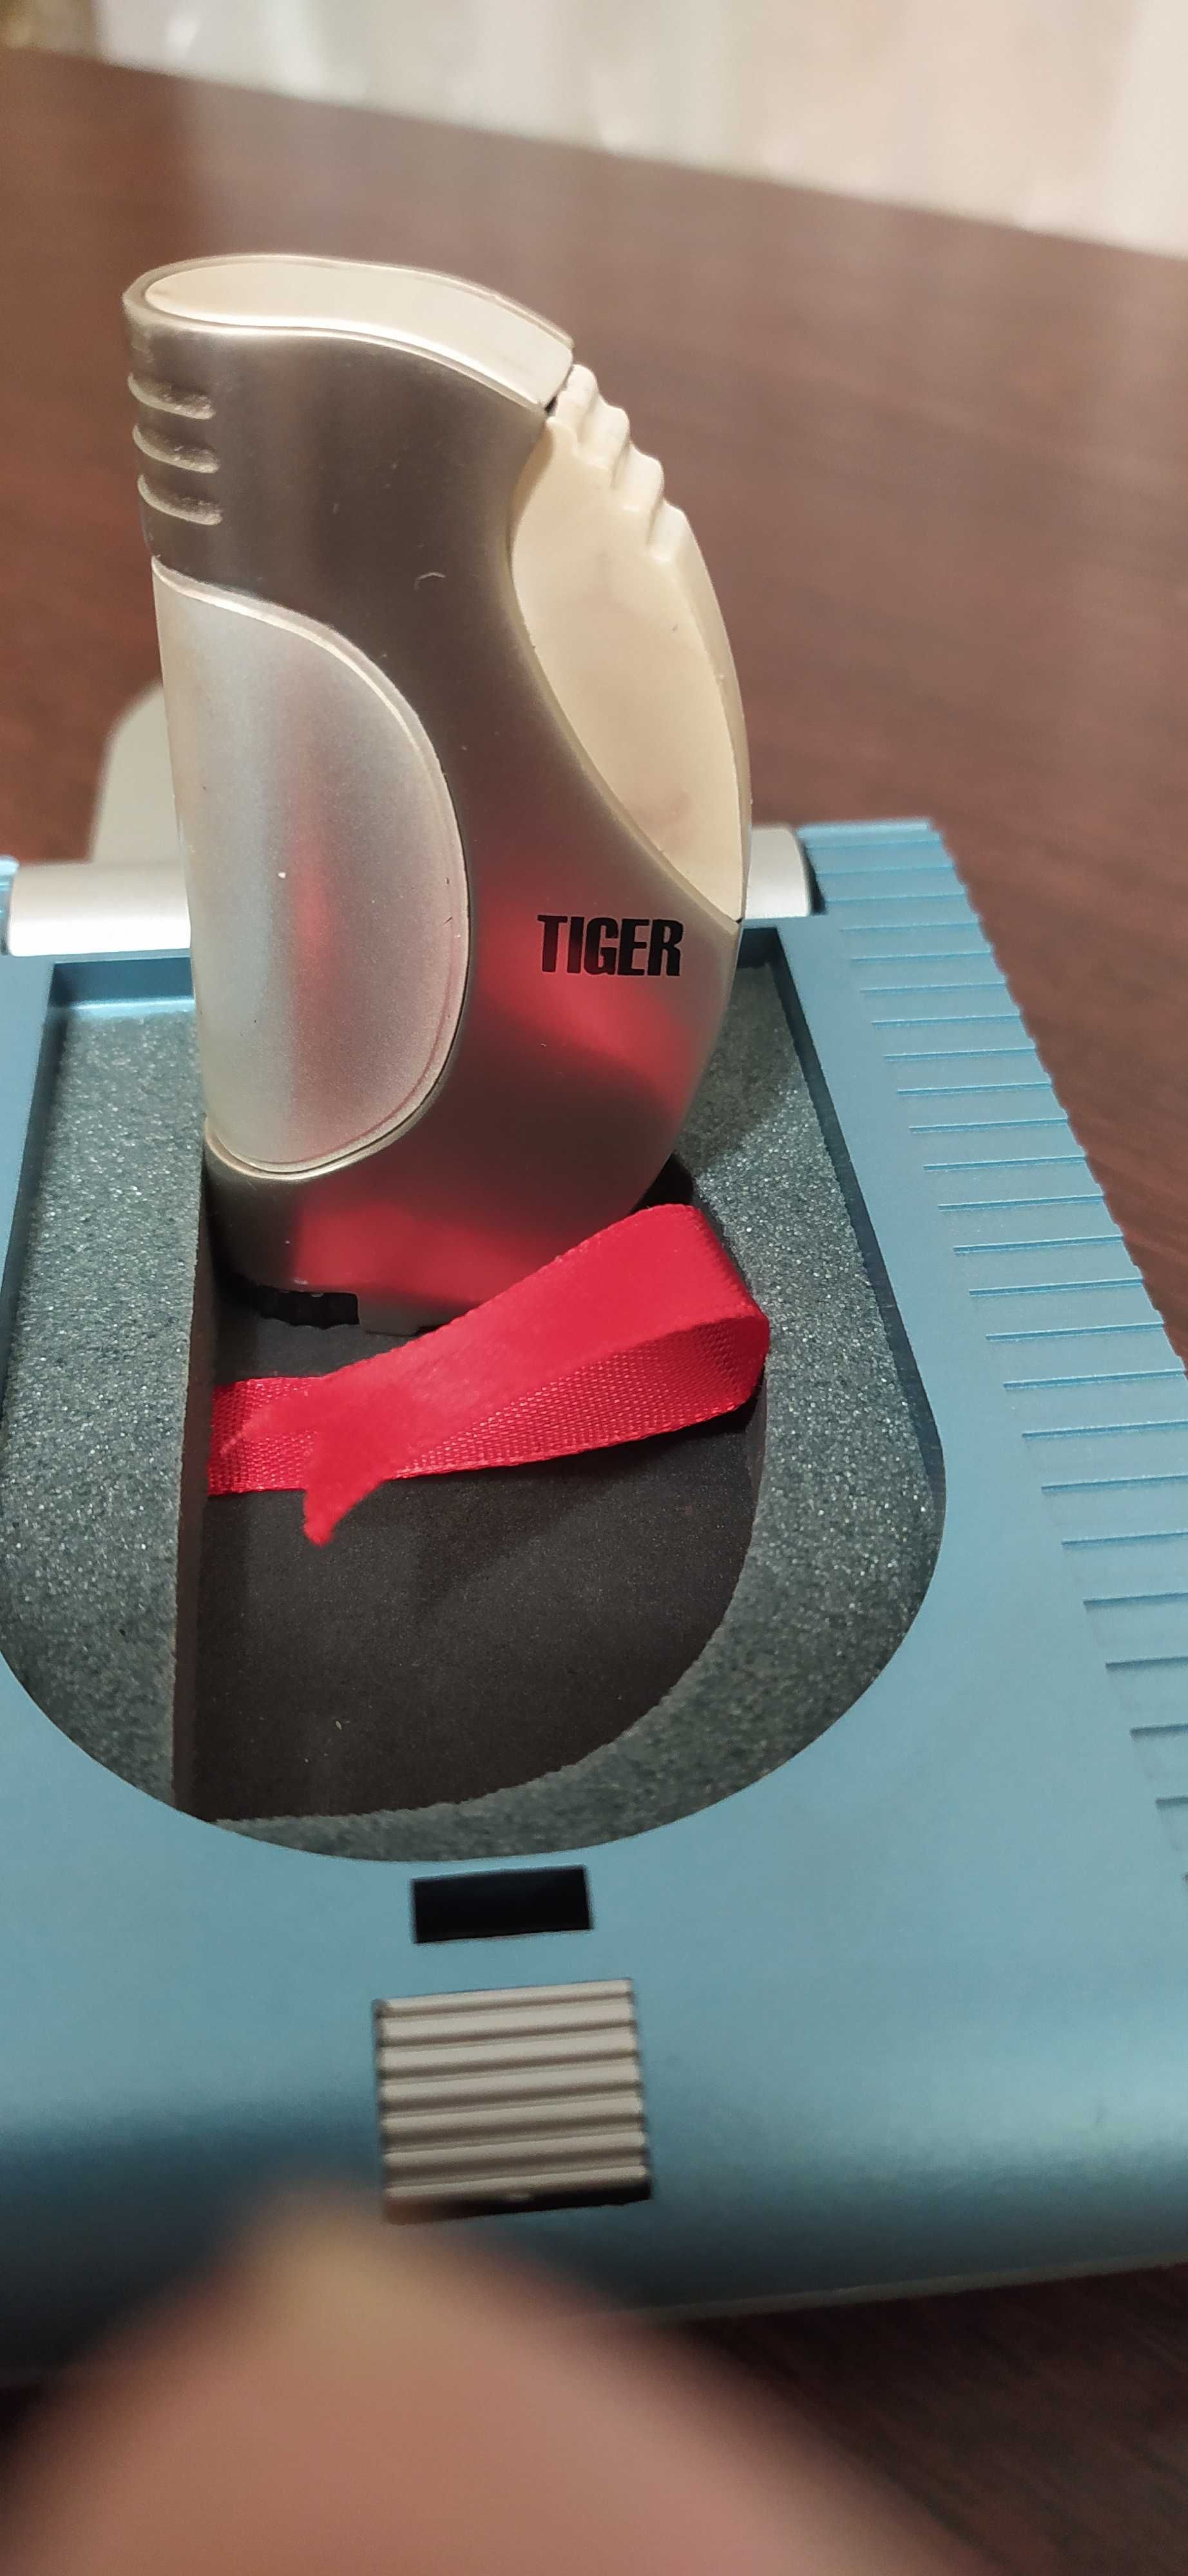 зажигалка Tiger Lighter TJ023WP